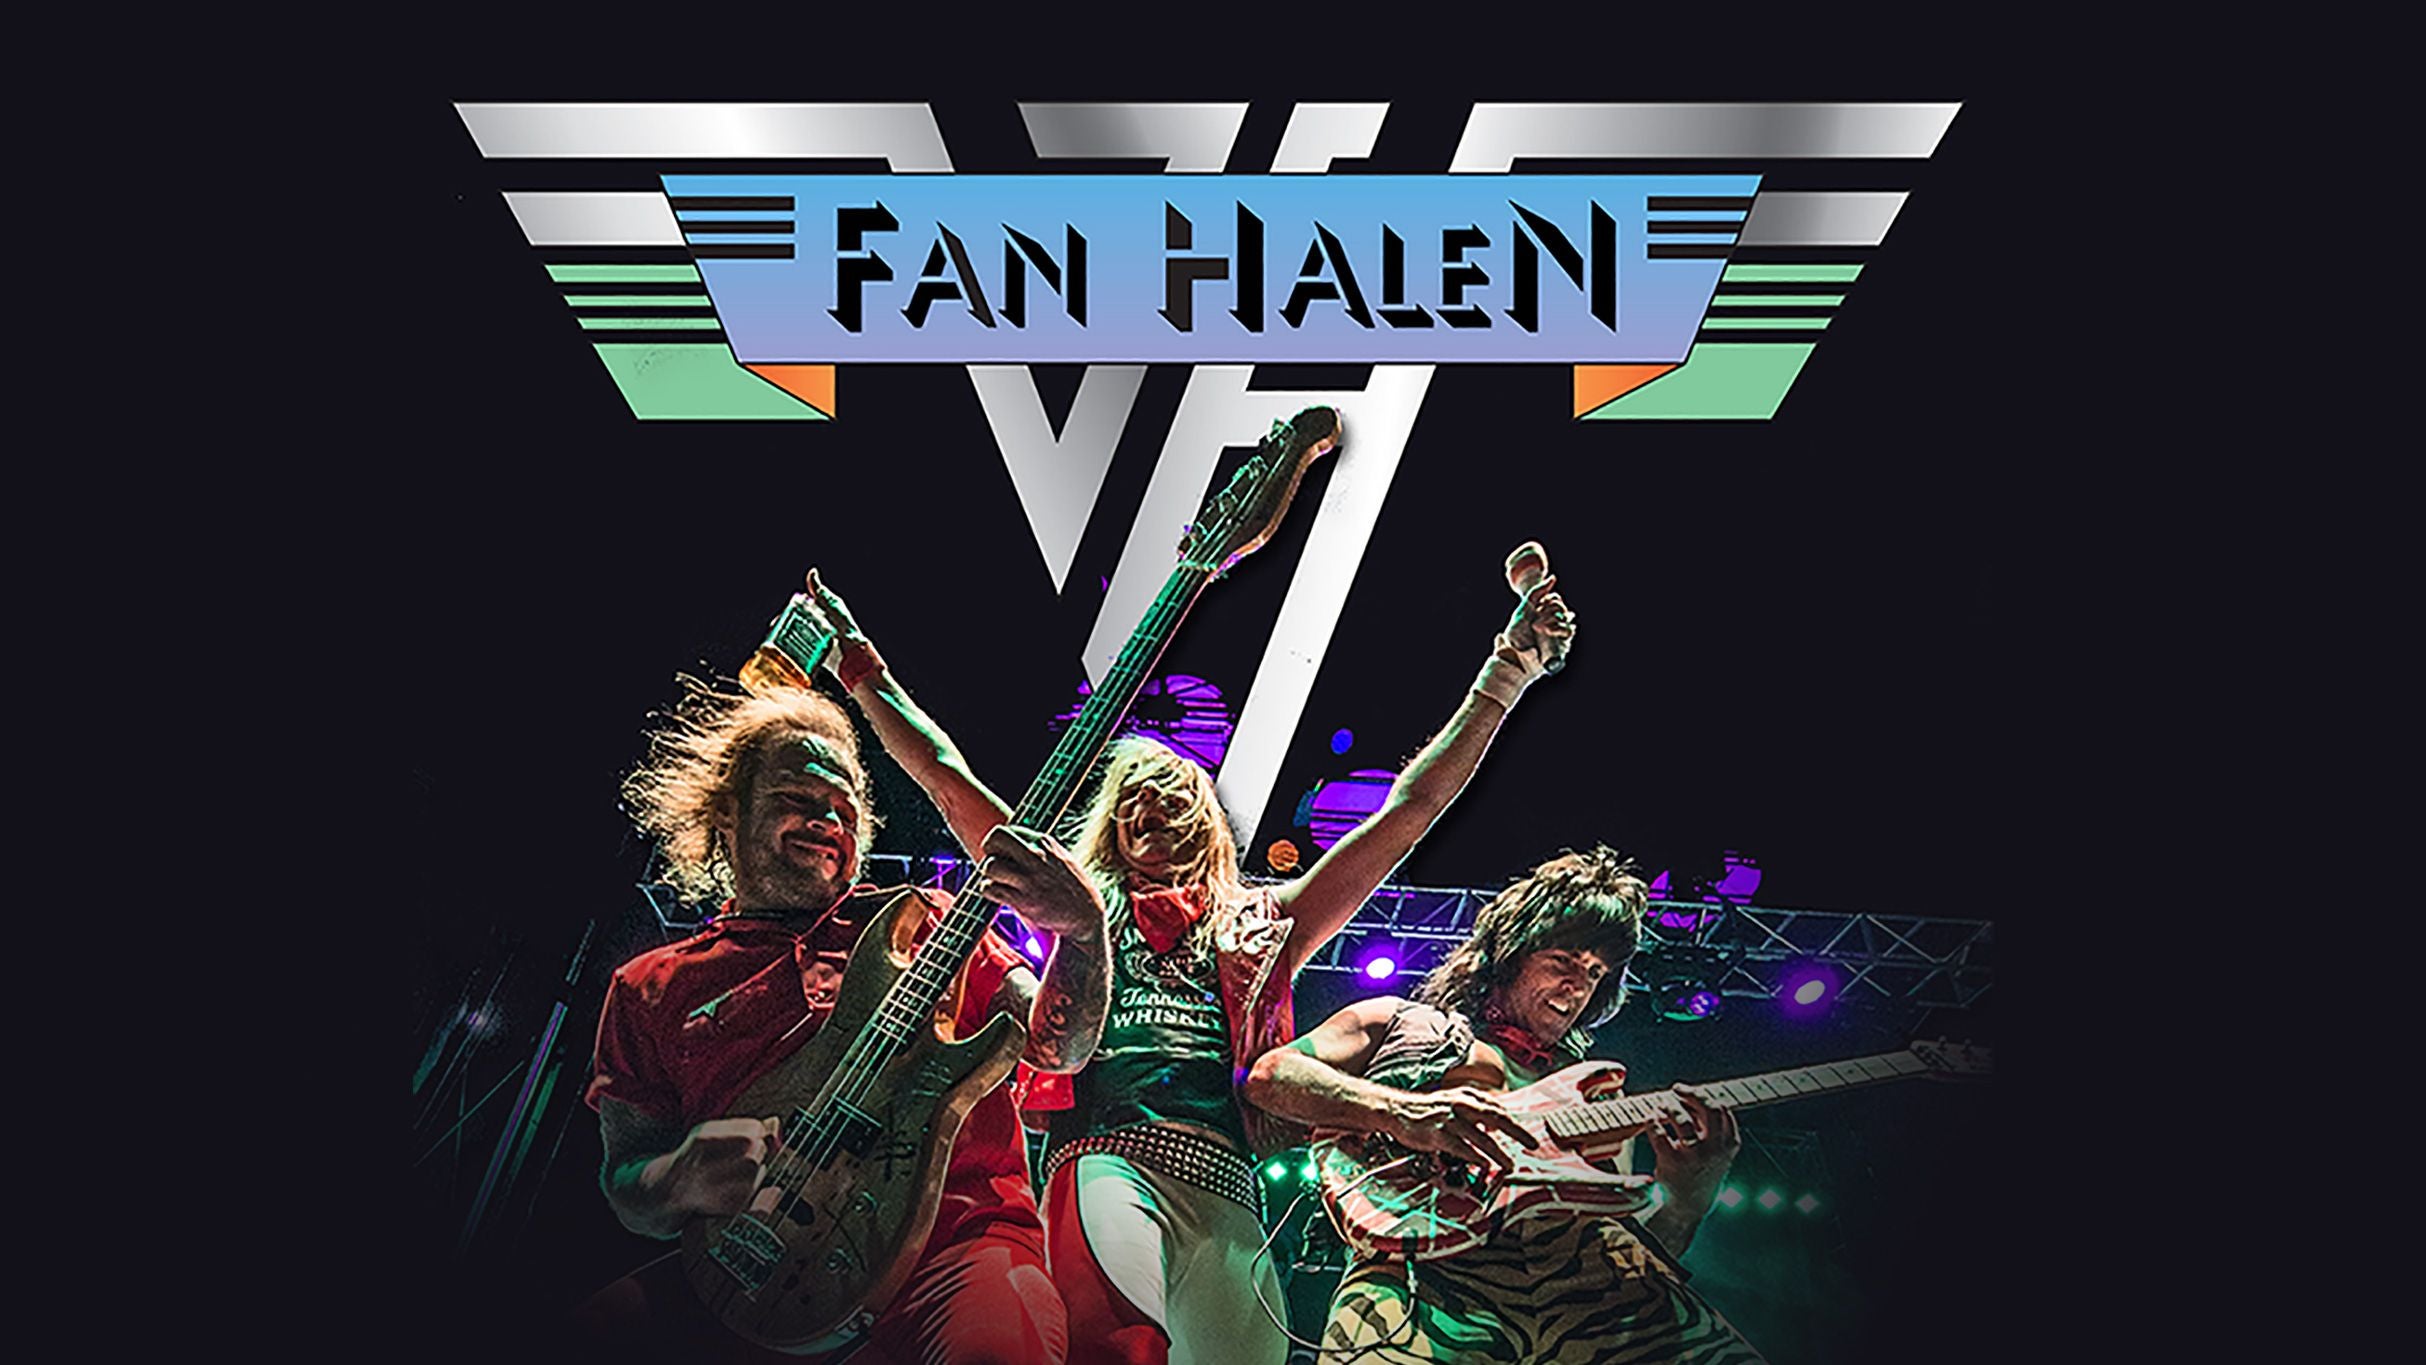 Fan Halen-The World’s Most Authentic Tribute to Van Halen!